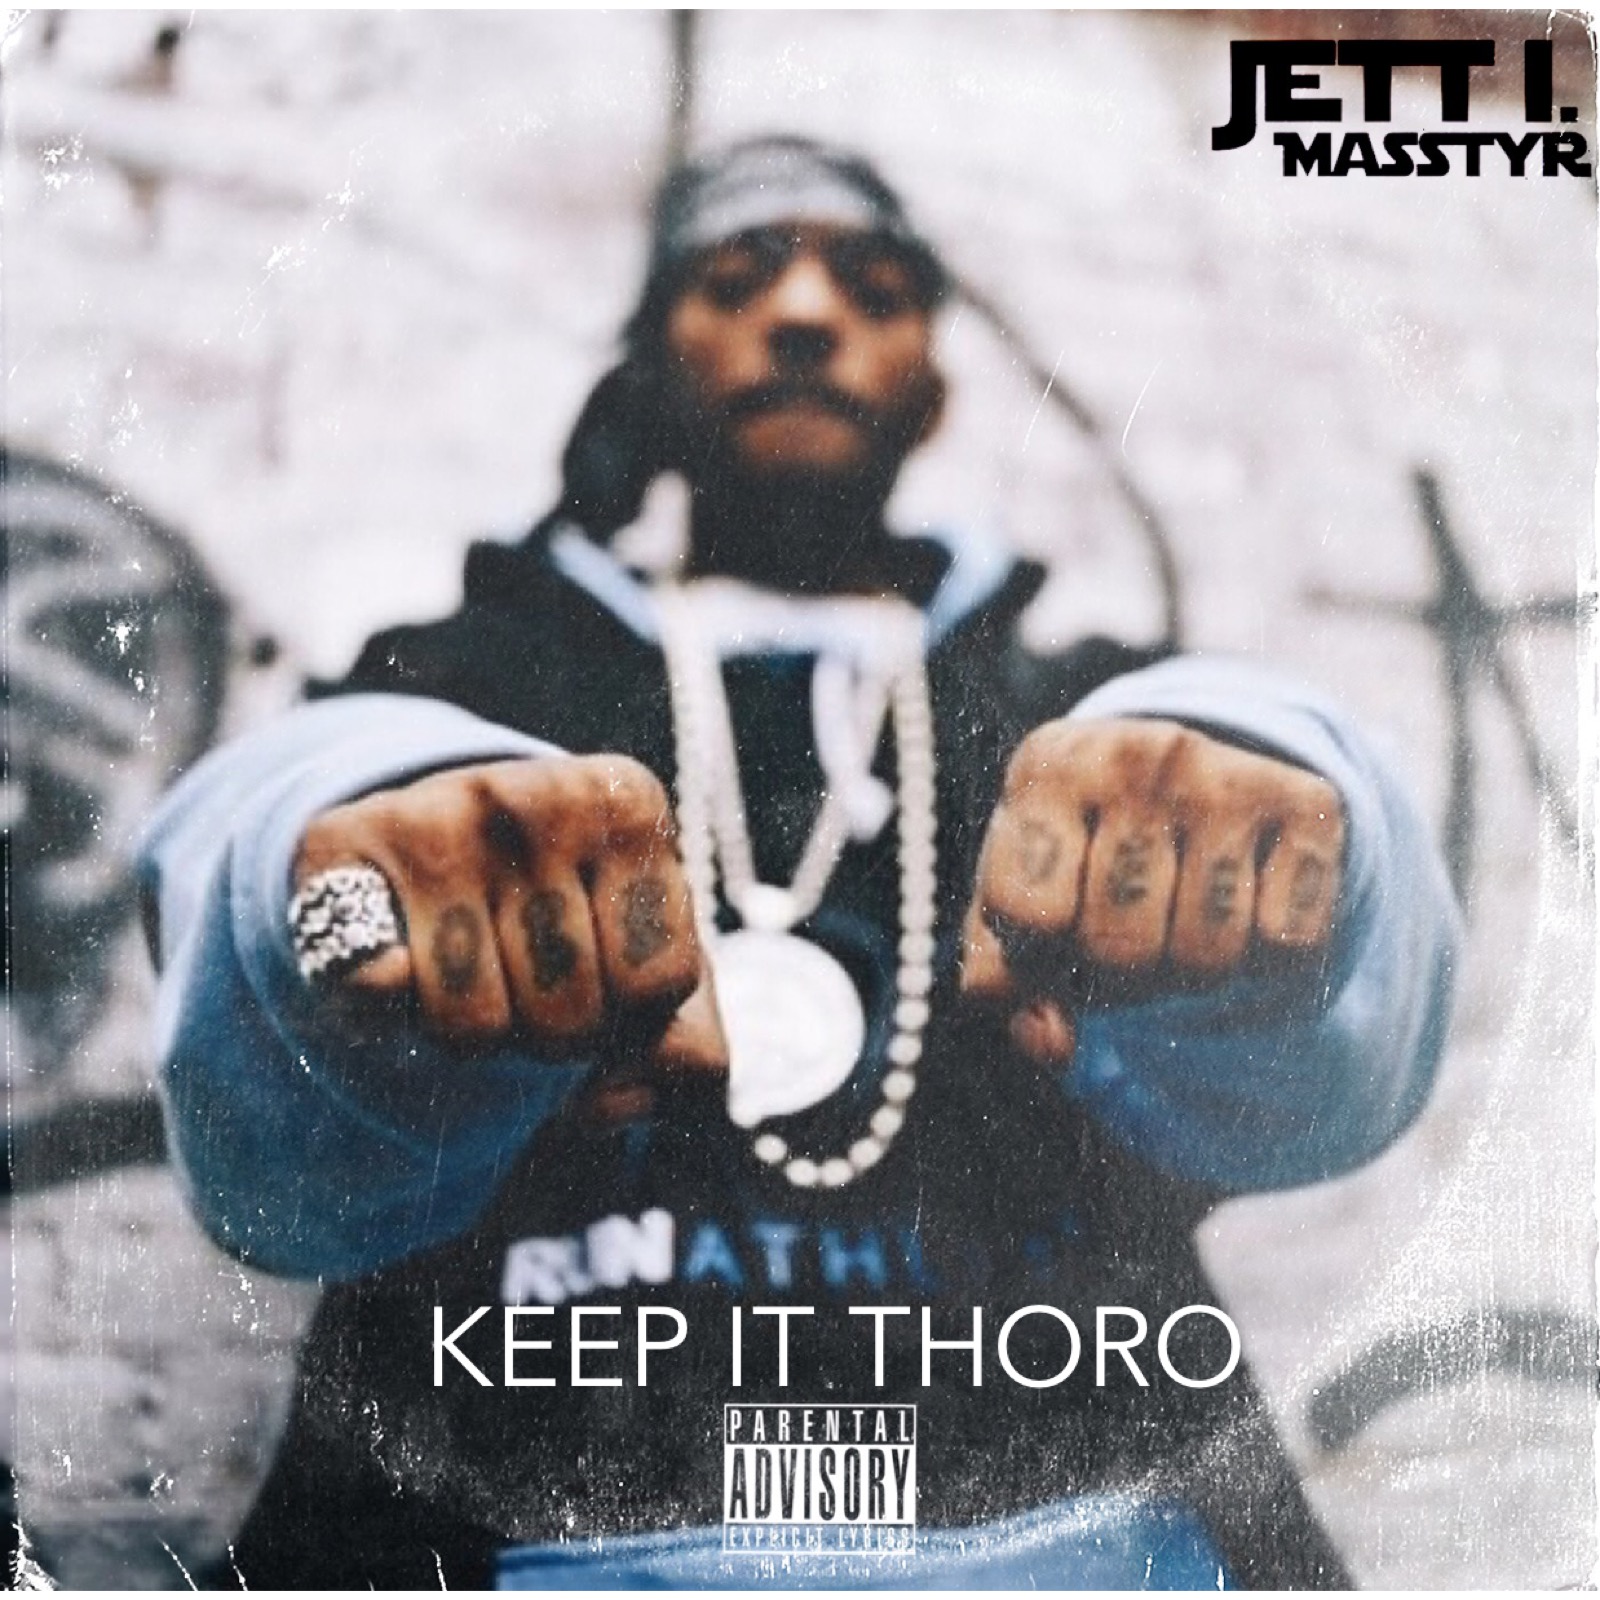 Prodigy – “Keep It Thoro” (remix) – produced by Jett I Masstyr